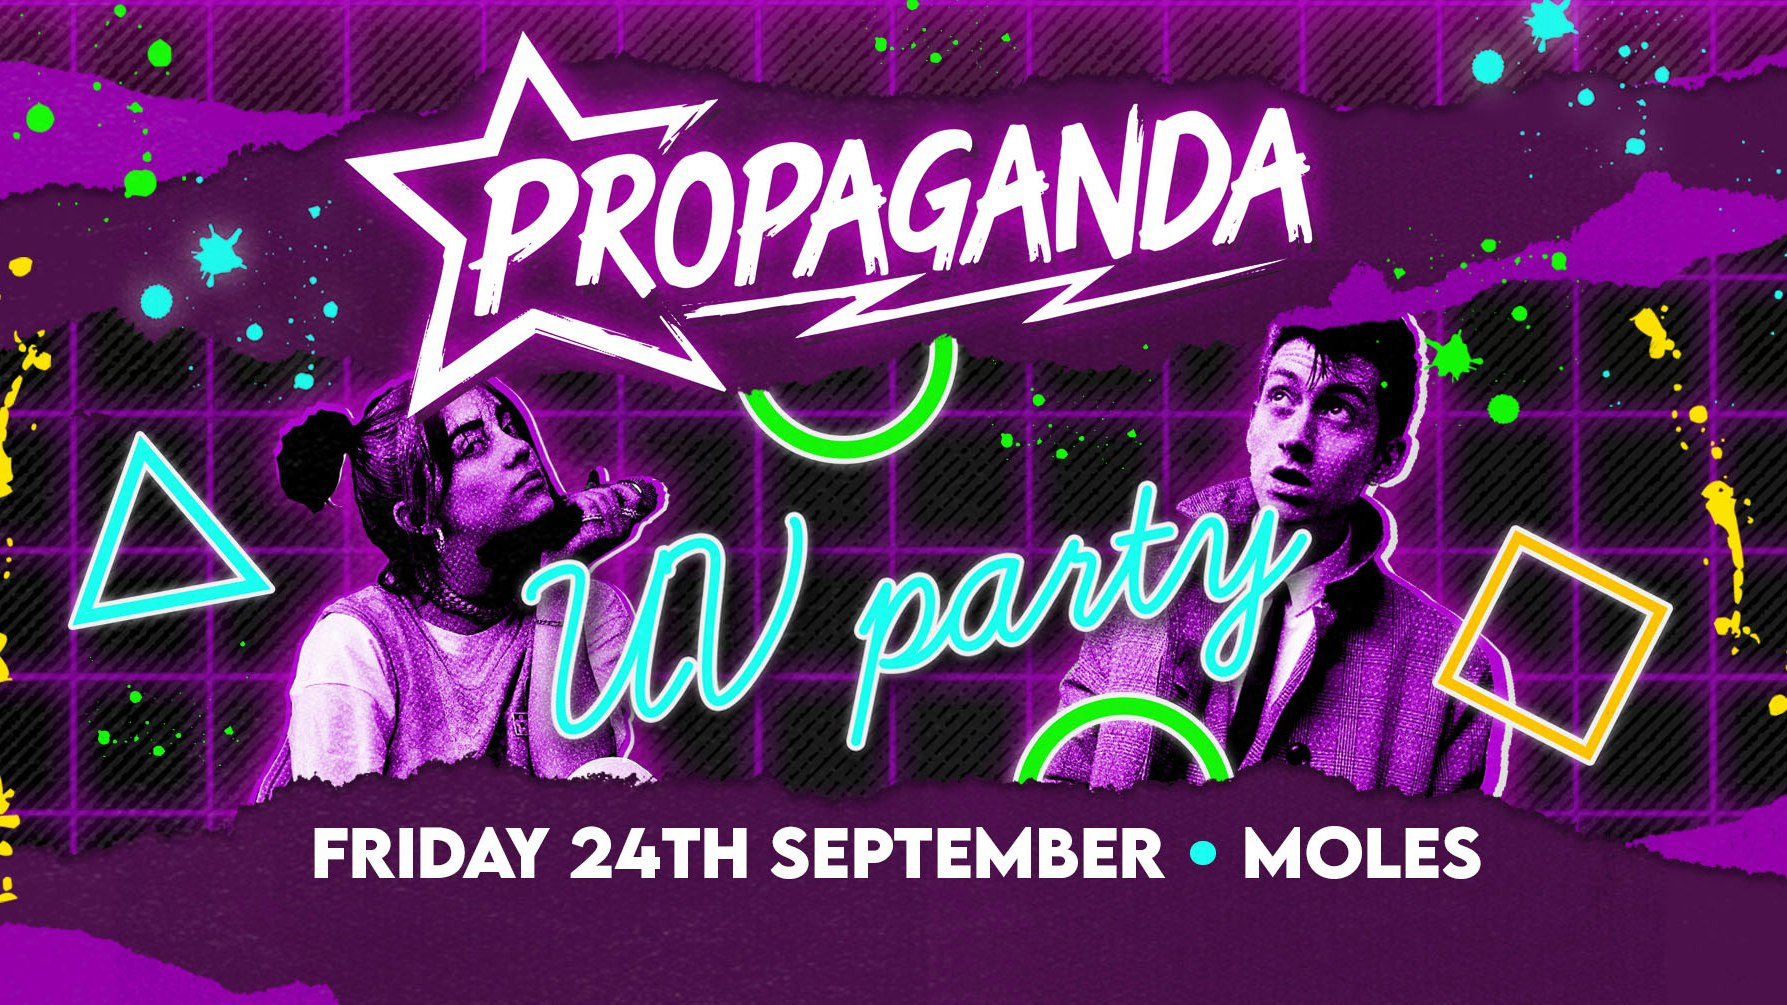 Propaganda Bath – UV Party!